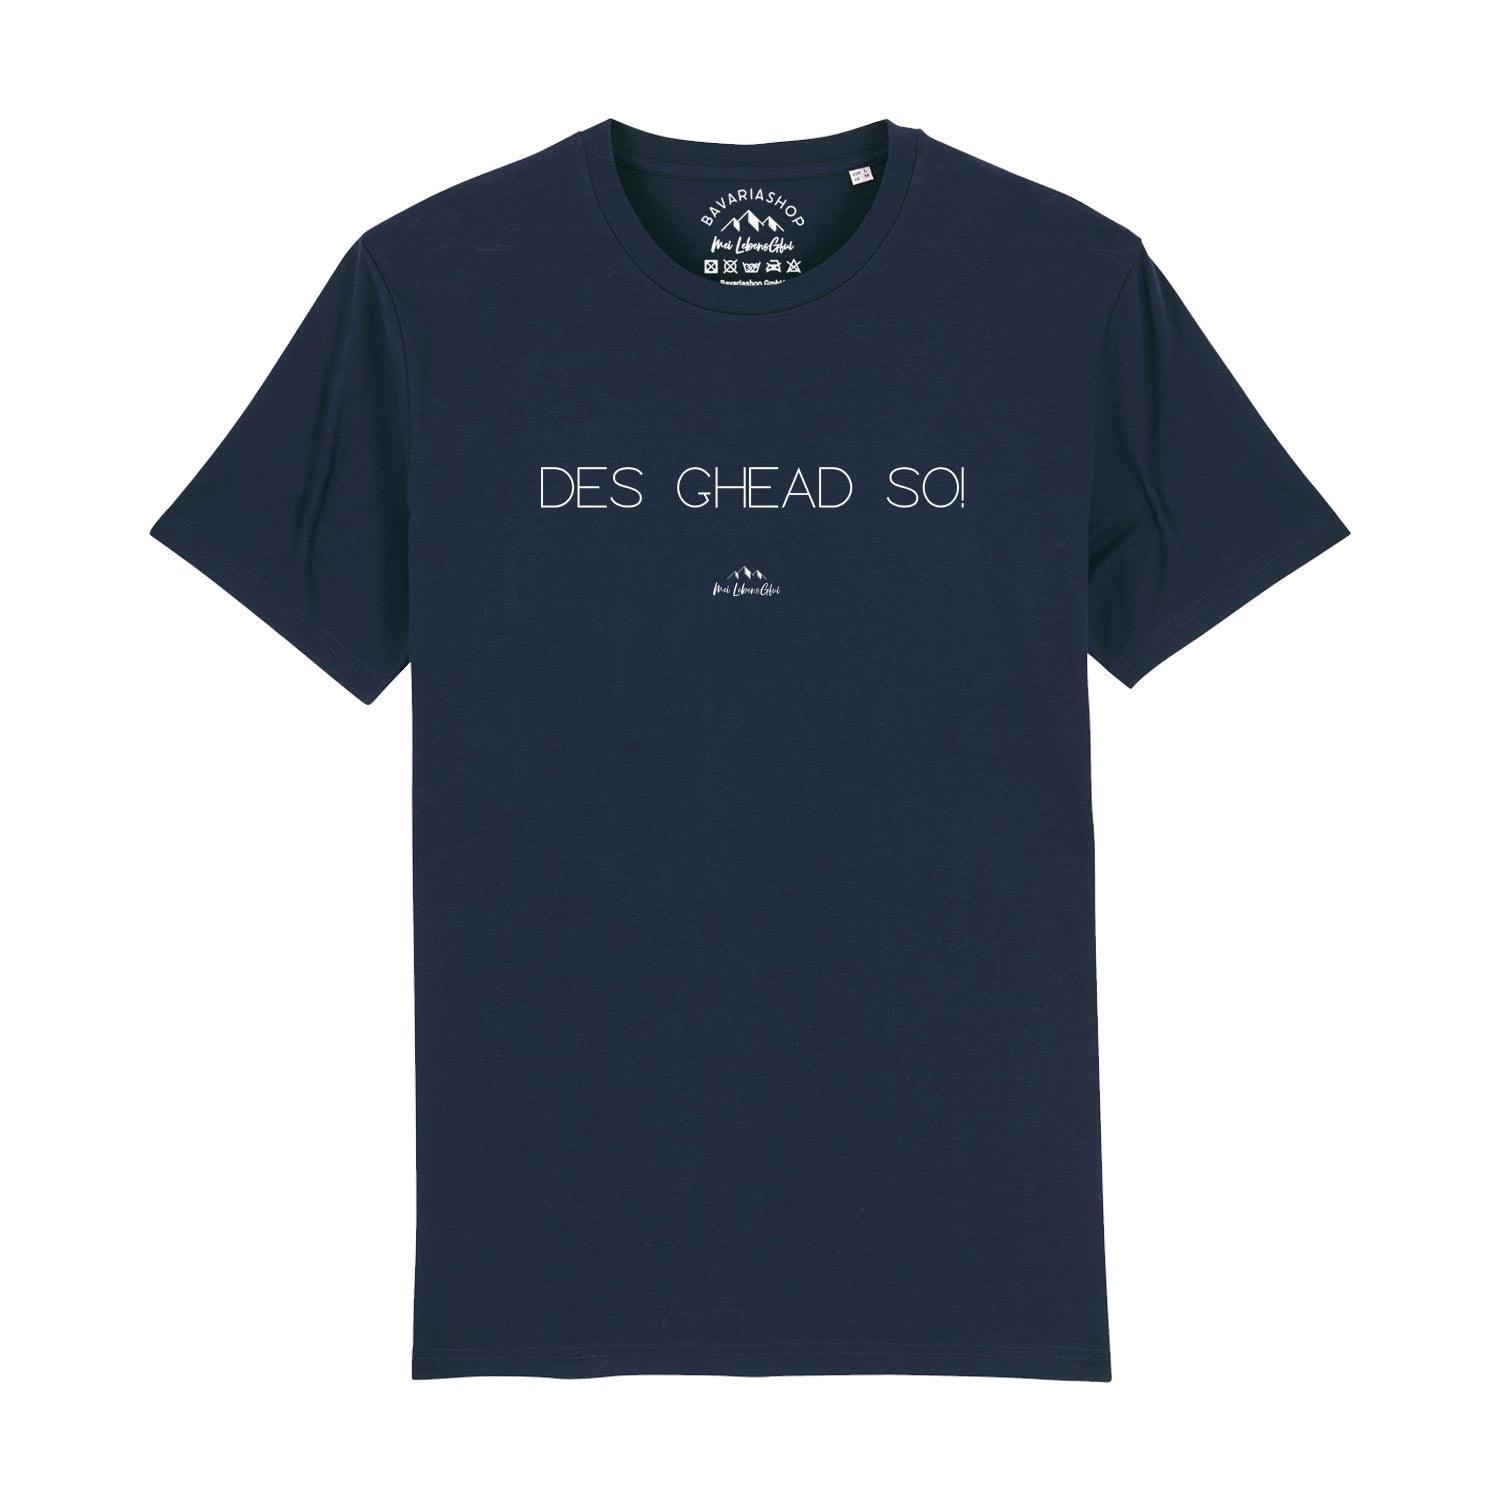 Herren T-Shirt "Des ghead so!" - bavariashop - mei LebensGfui